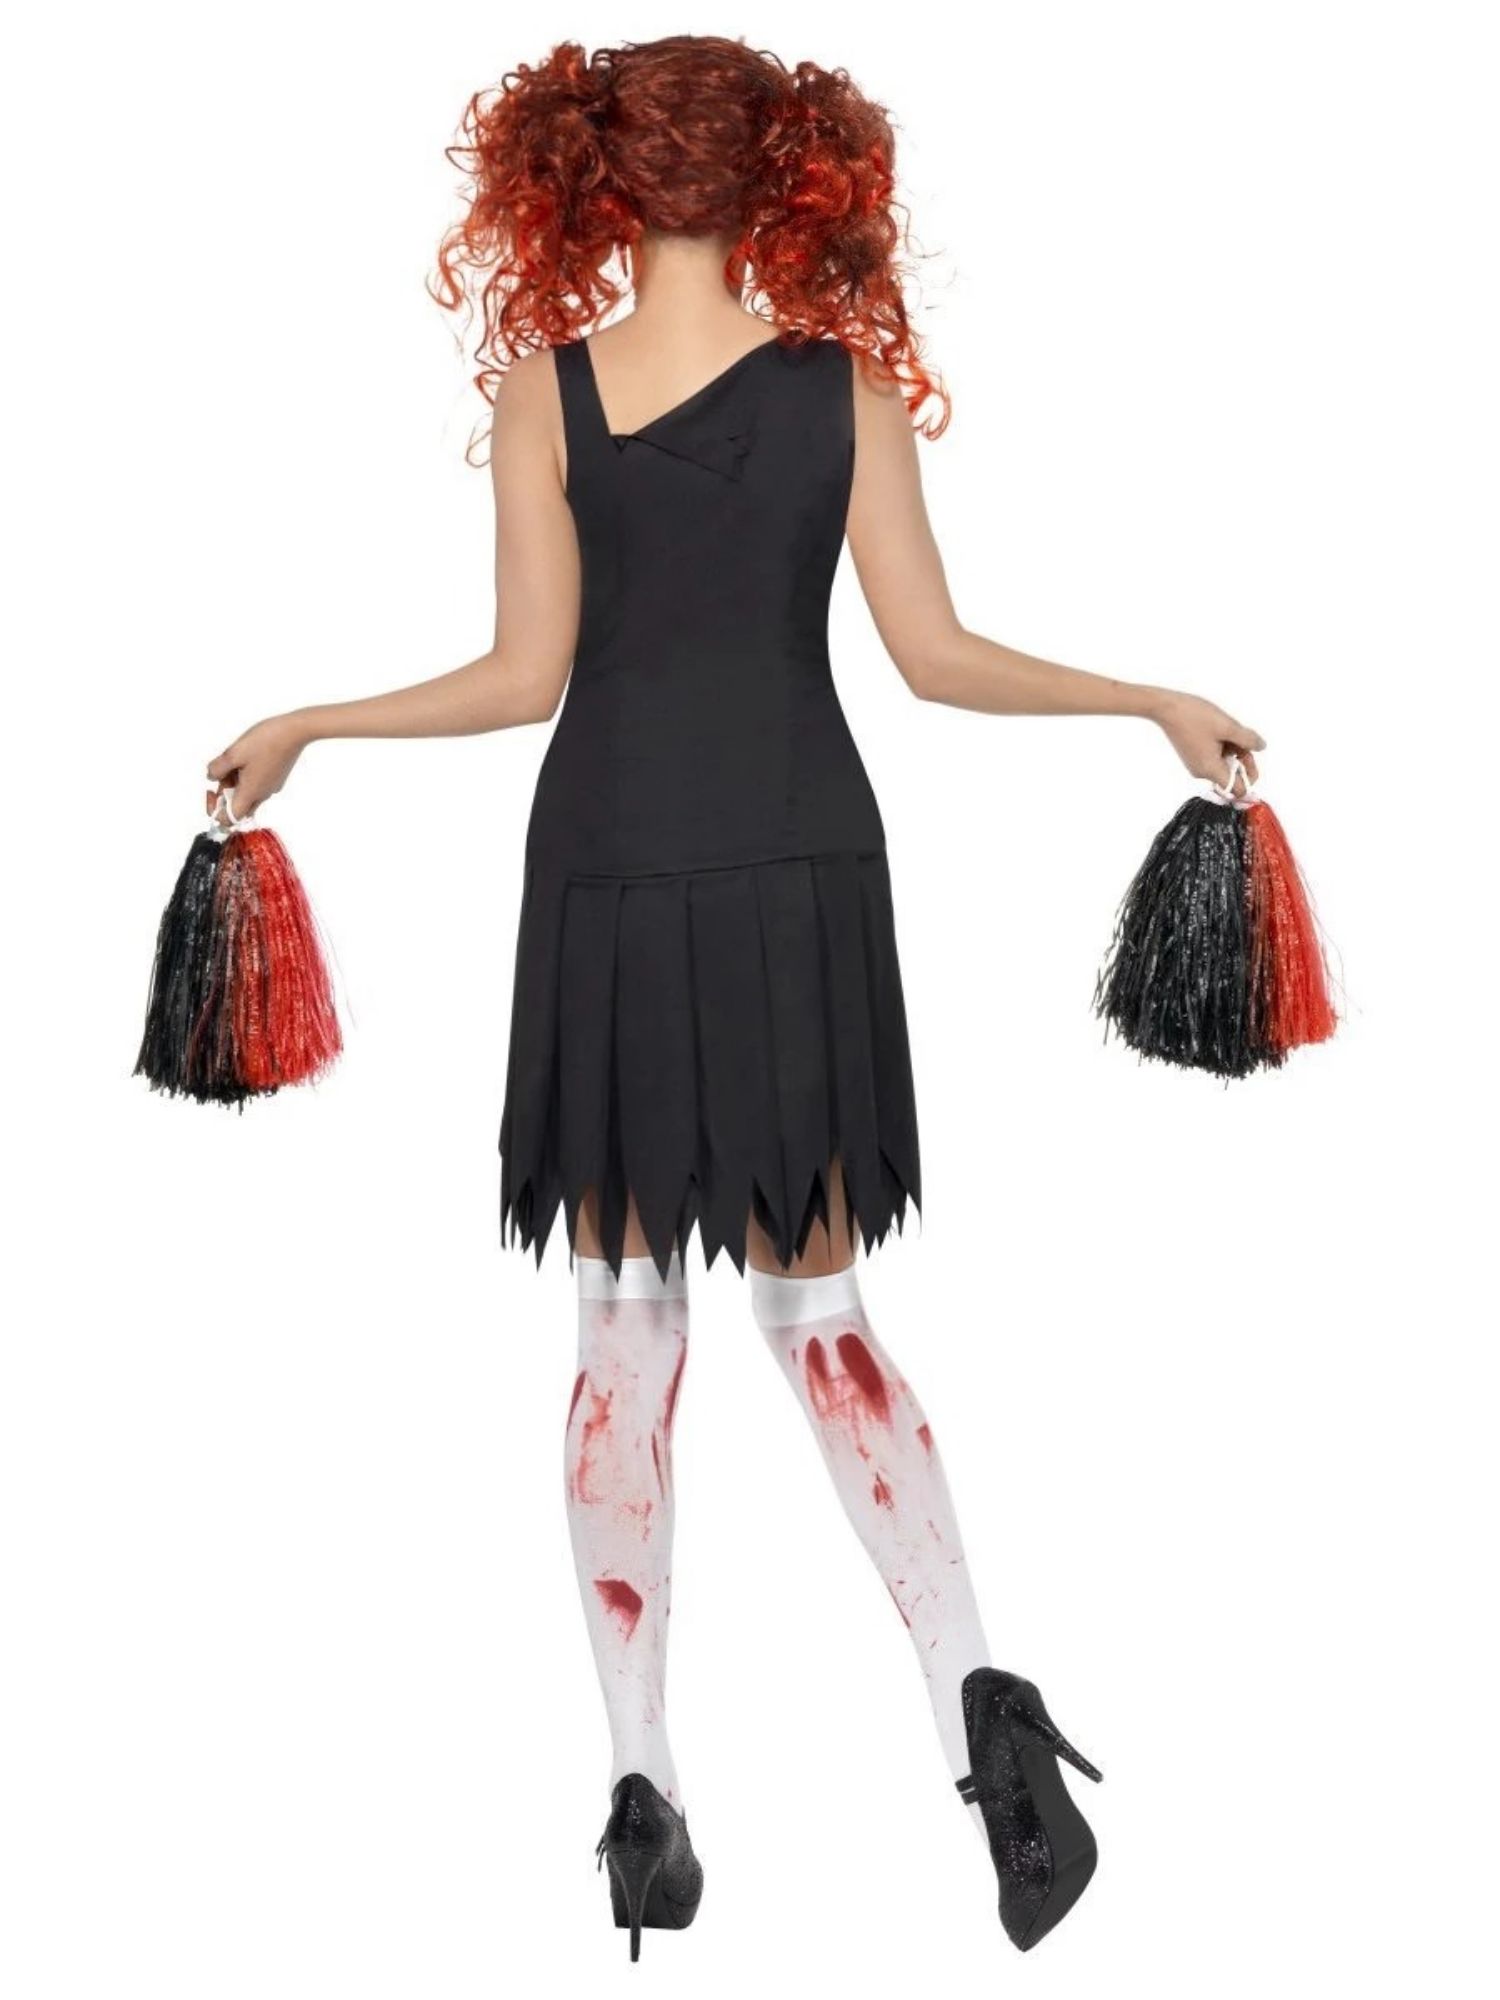 Smiffys 49" Red and Black High School Horror Cheerleader Women Adult Halloween Costume - Medium